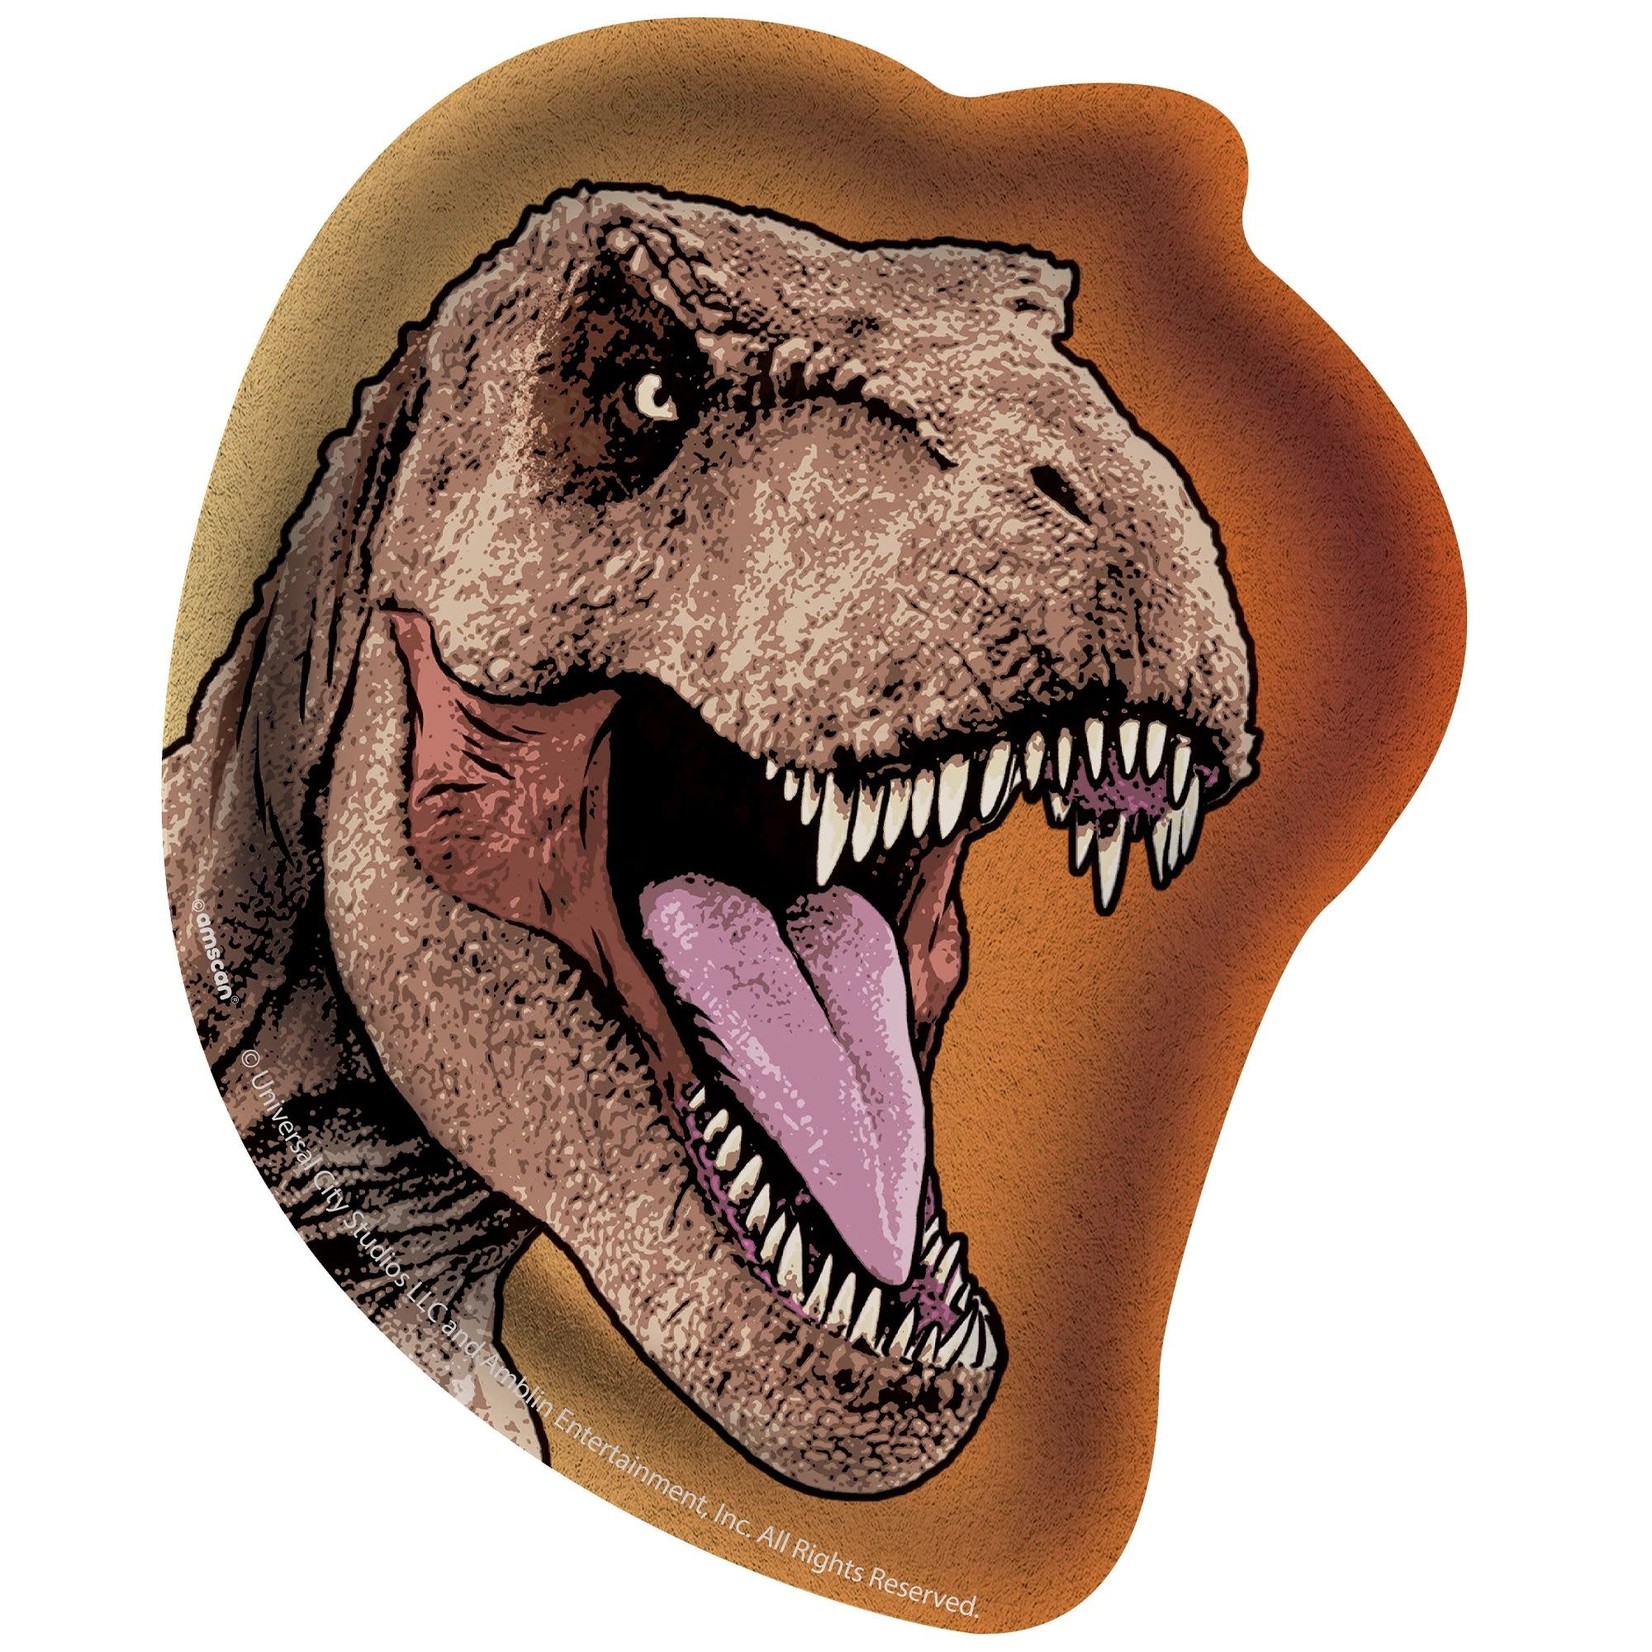 Jurassic World Into the Wild Shaped Plates, 7"